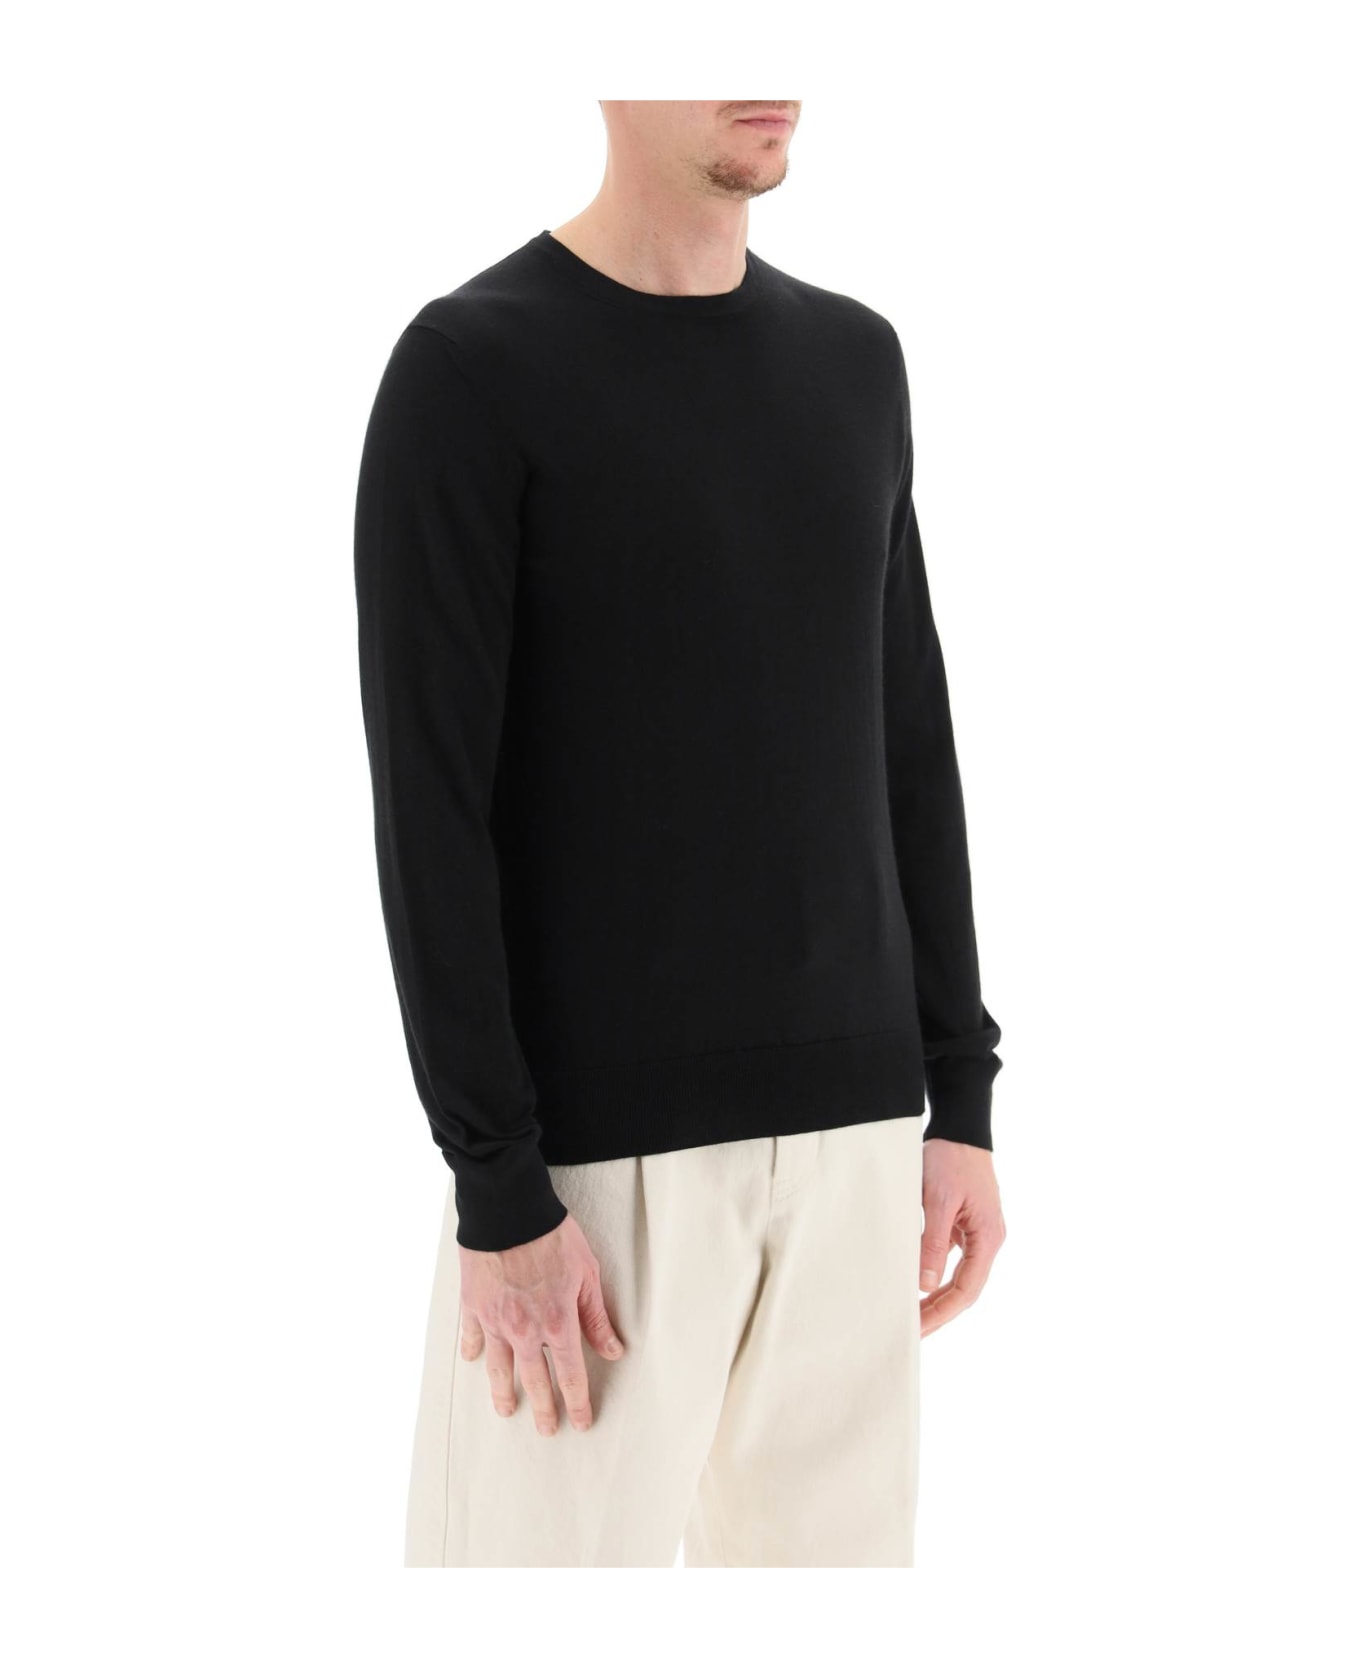 Zegna Light Cashmere And Silk Sweater